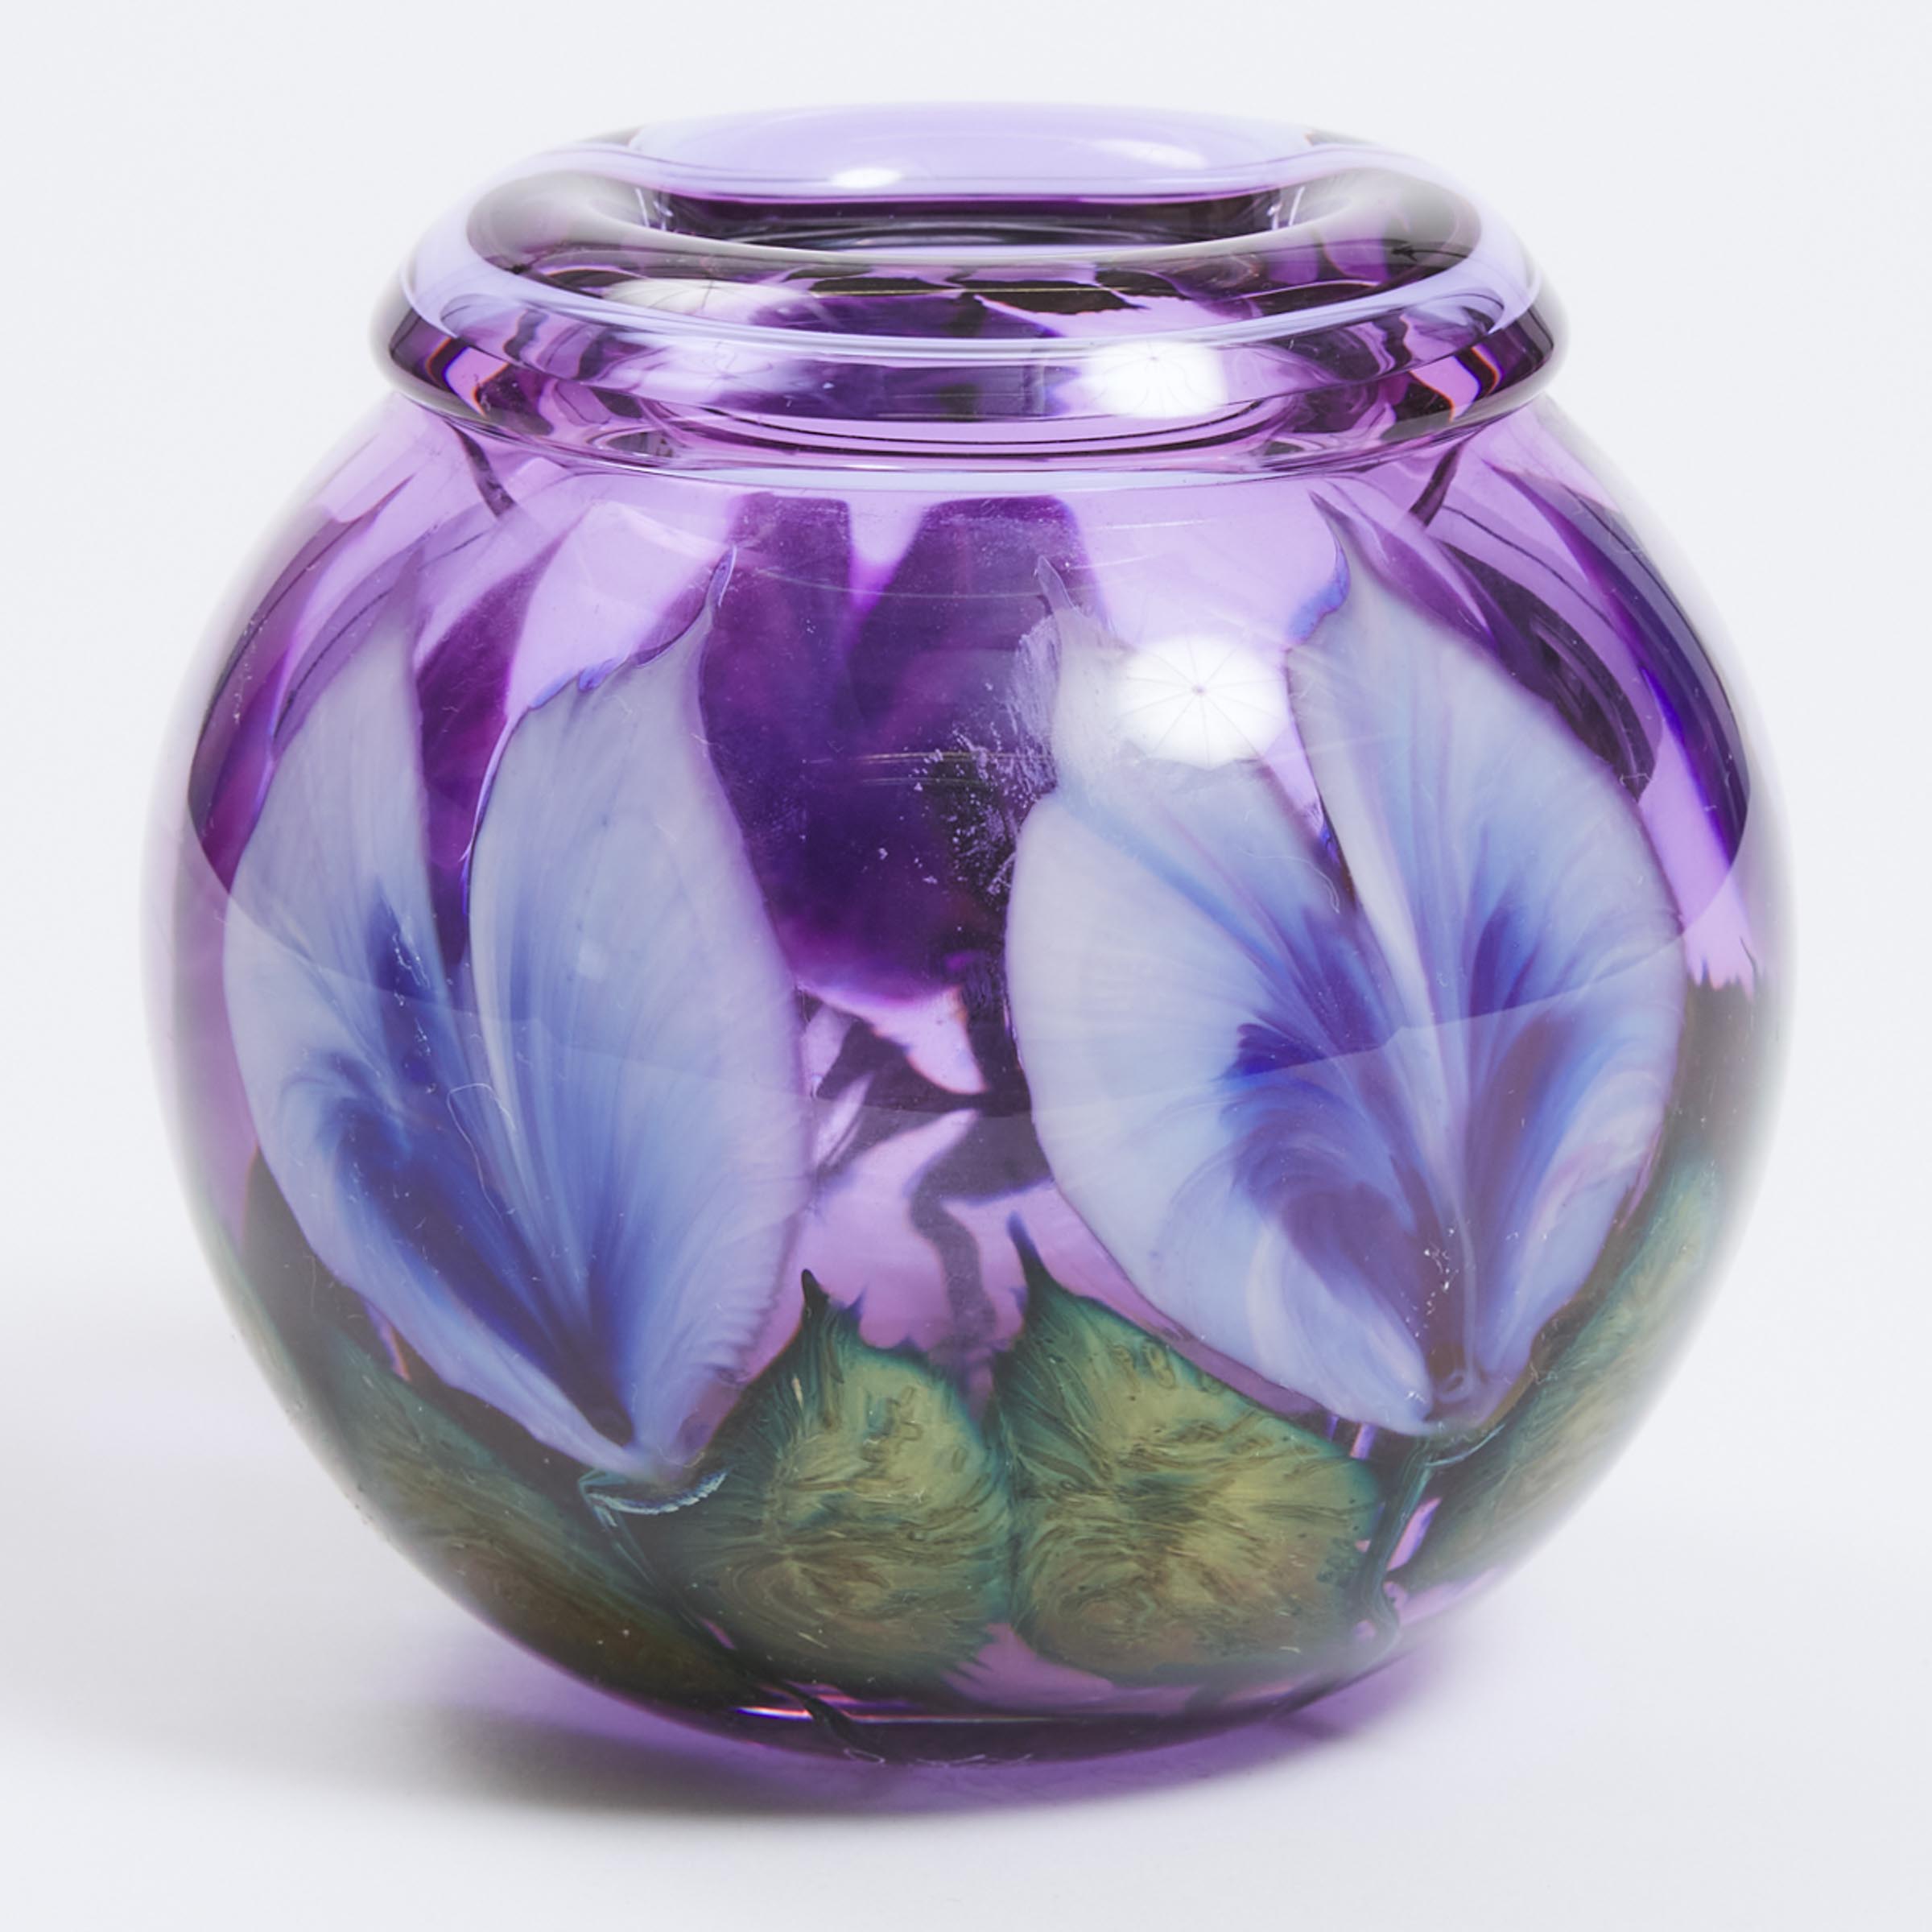 Daniel Lotton (American, b.1963), Floral Glass Vase, 2001